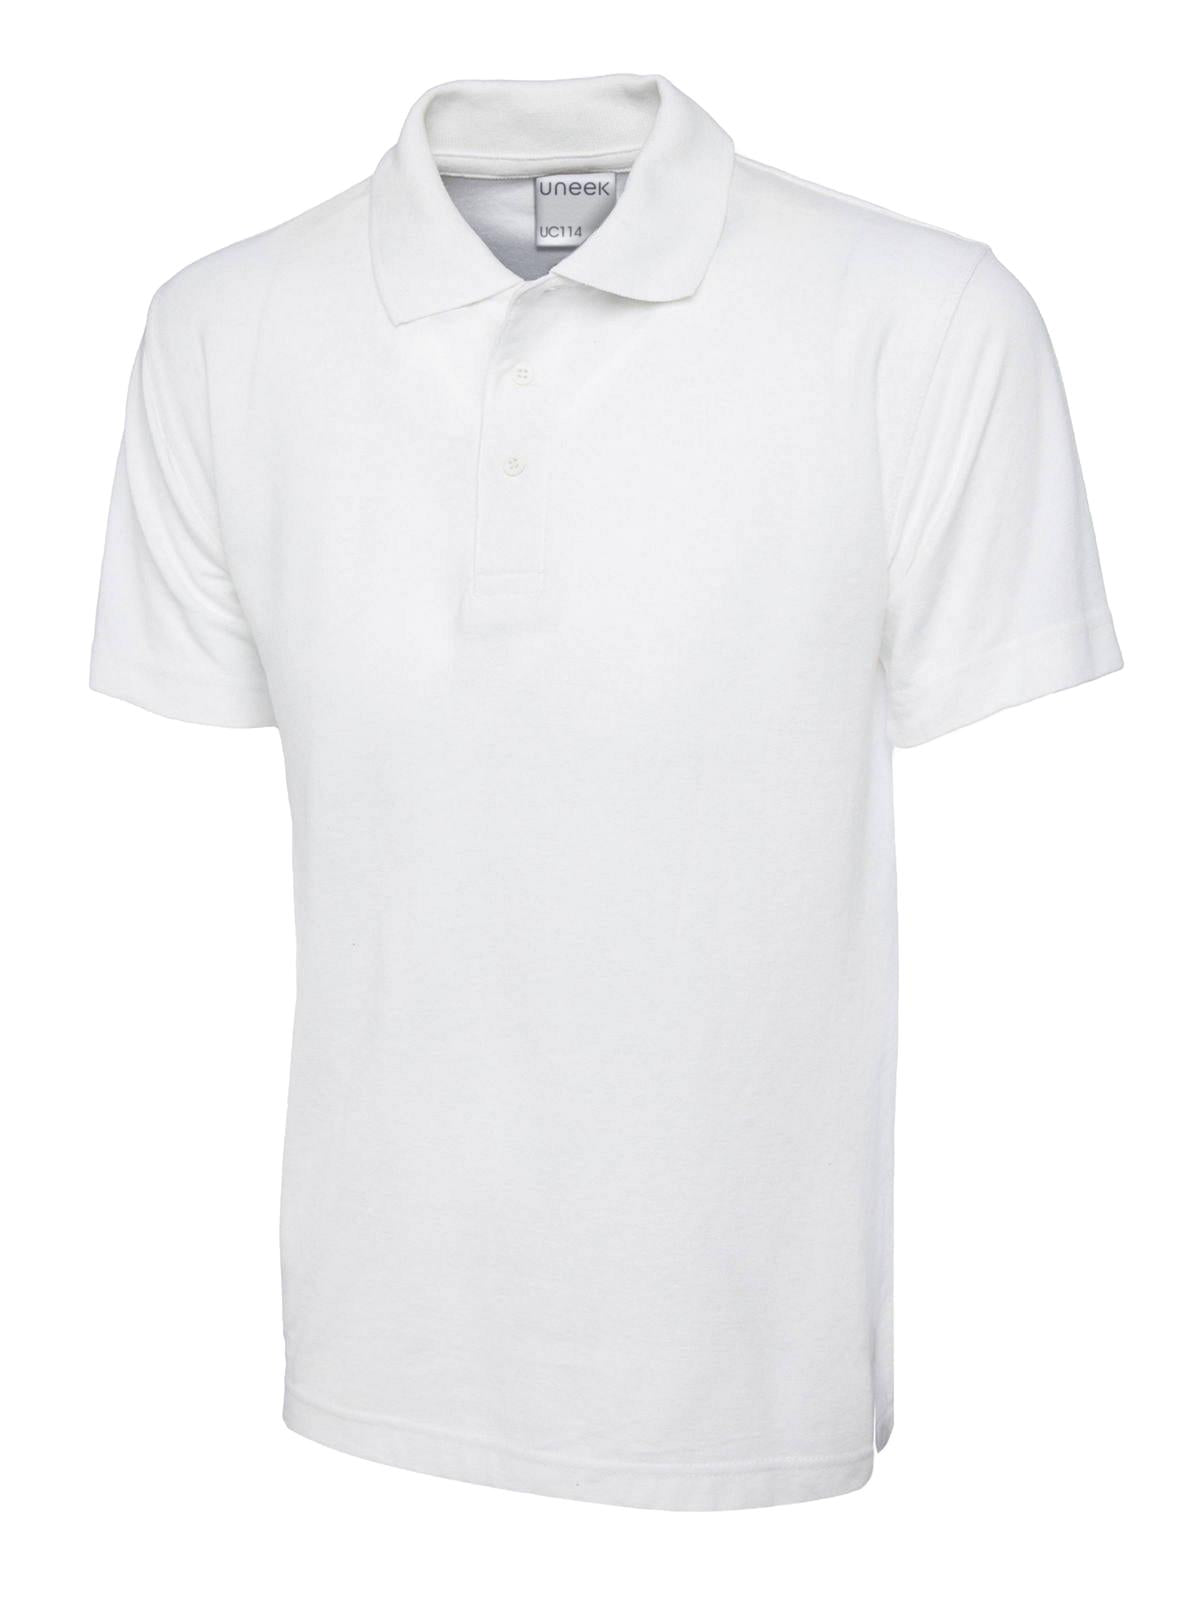 Uneek Men's Ultra Cotton Poloshirt - White